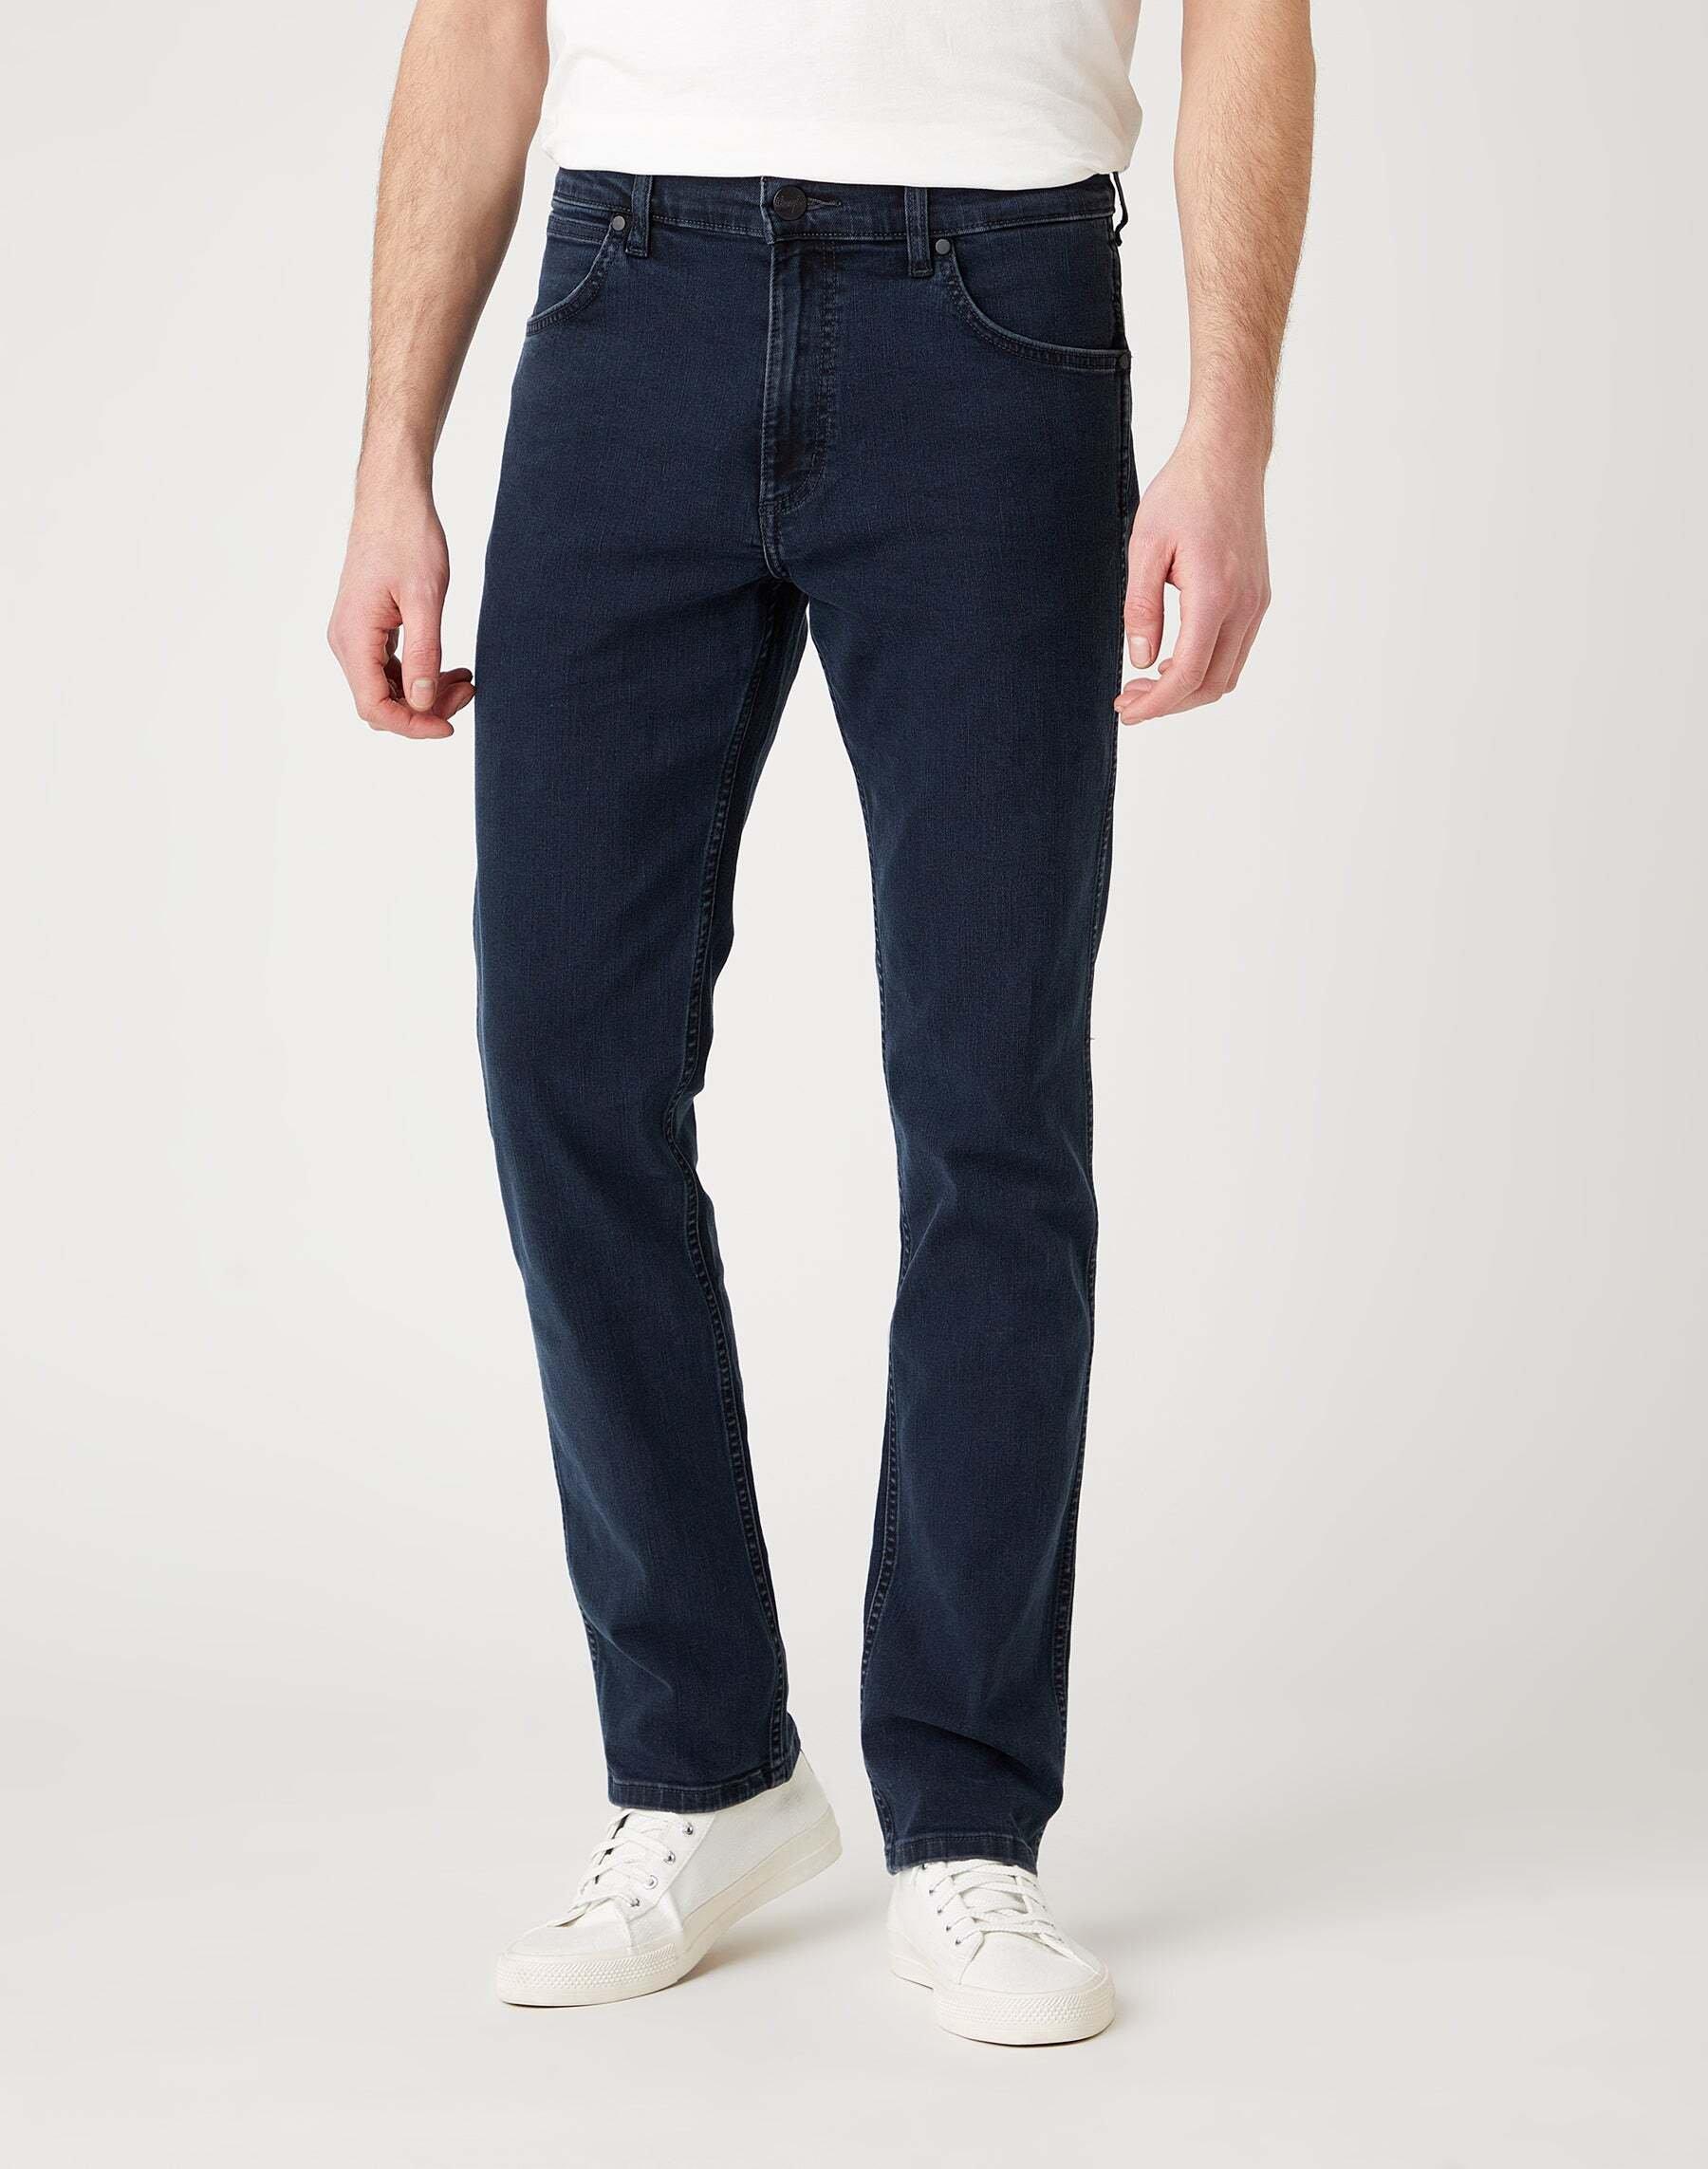 Jeans Straight Leg Greensboro Herren Blau Denim L32/W34 von Wrangler